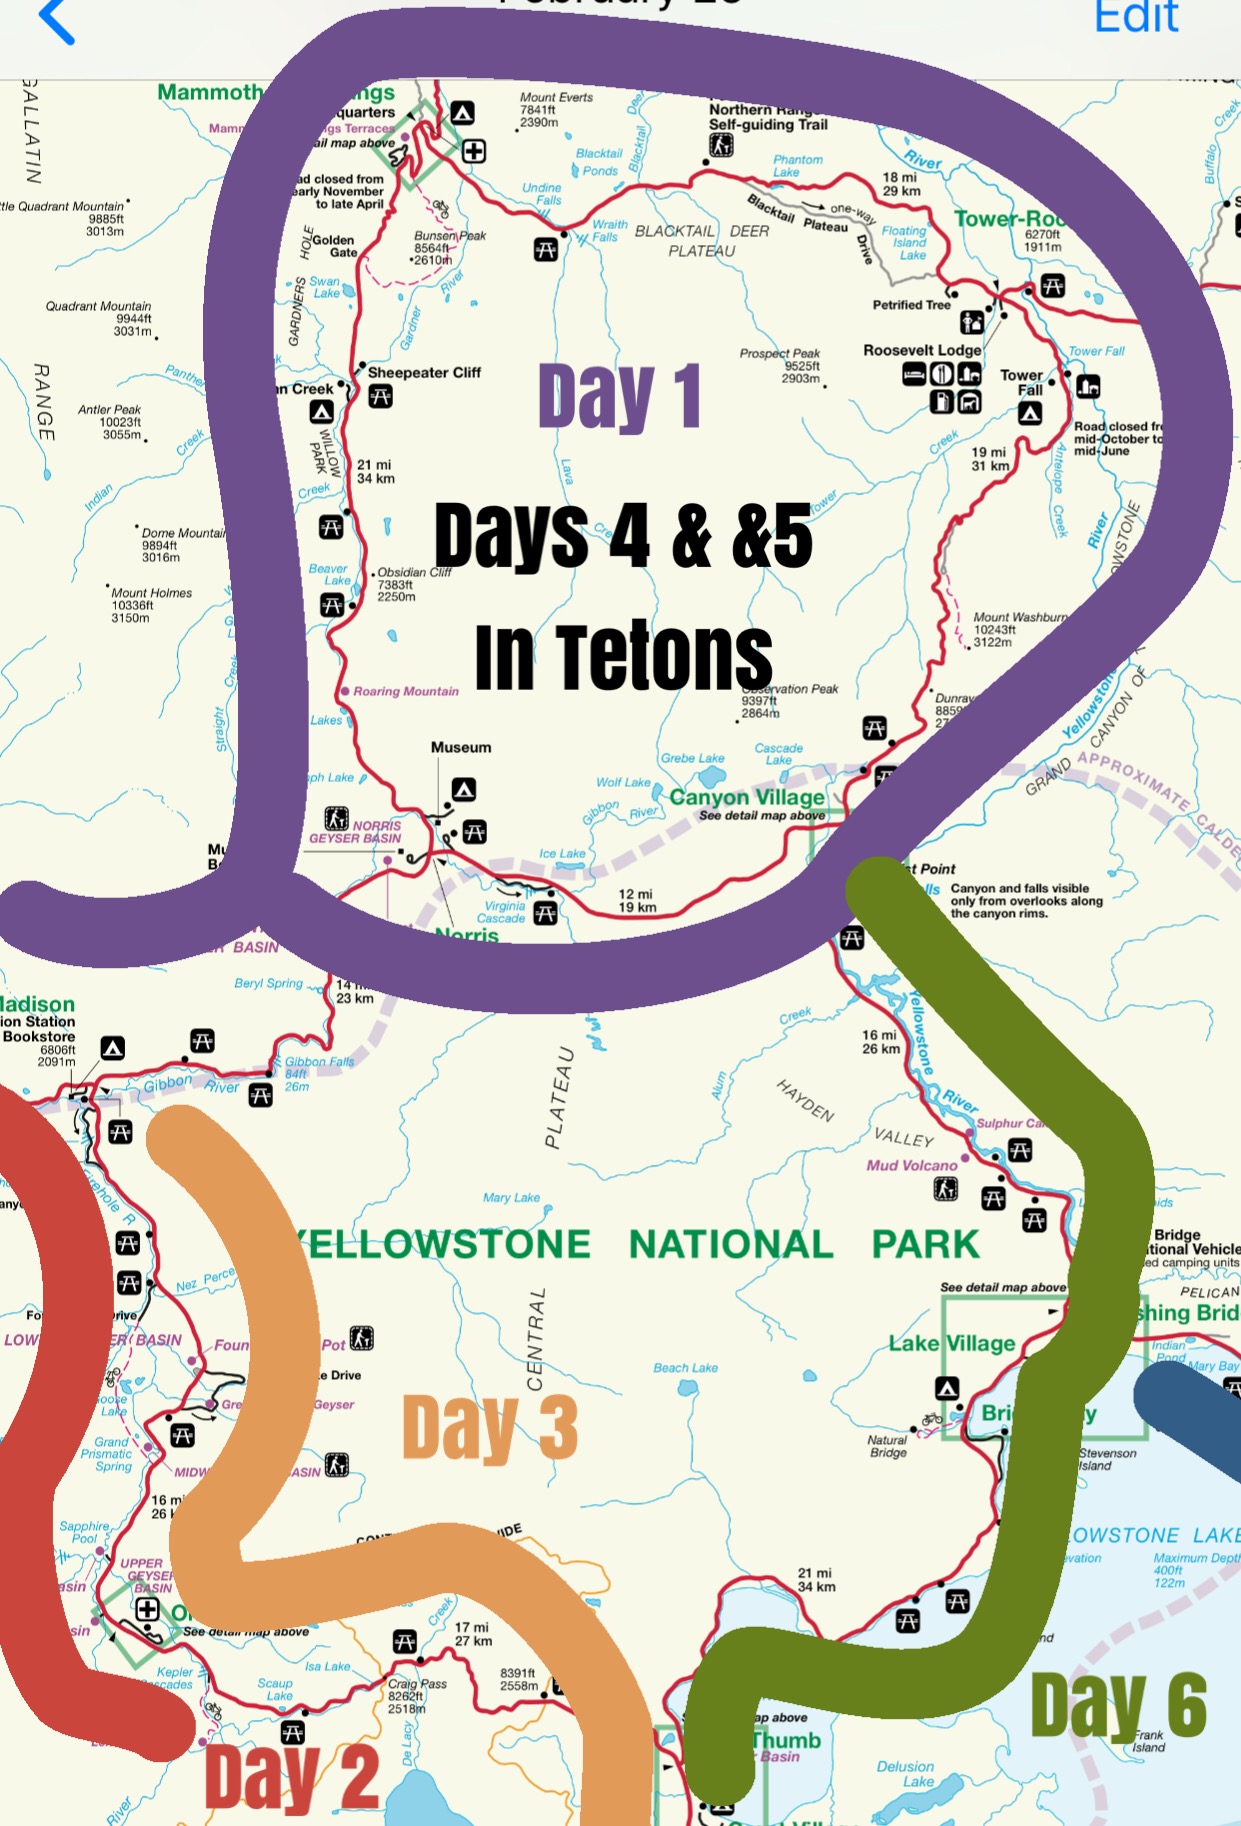 plan trip to yellowstone and grand tetons